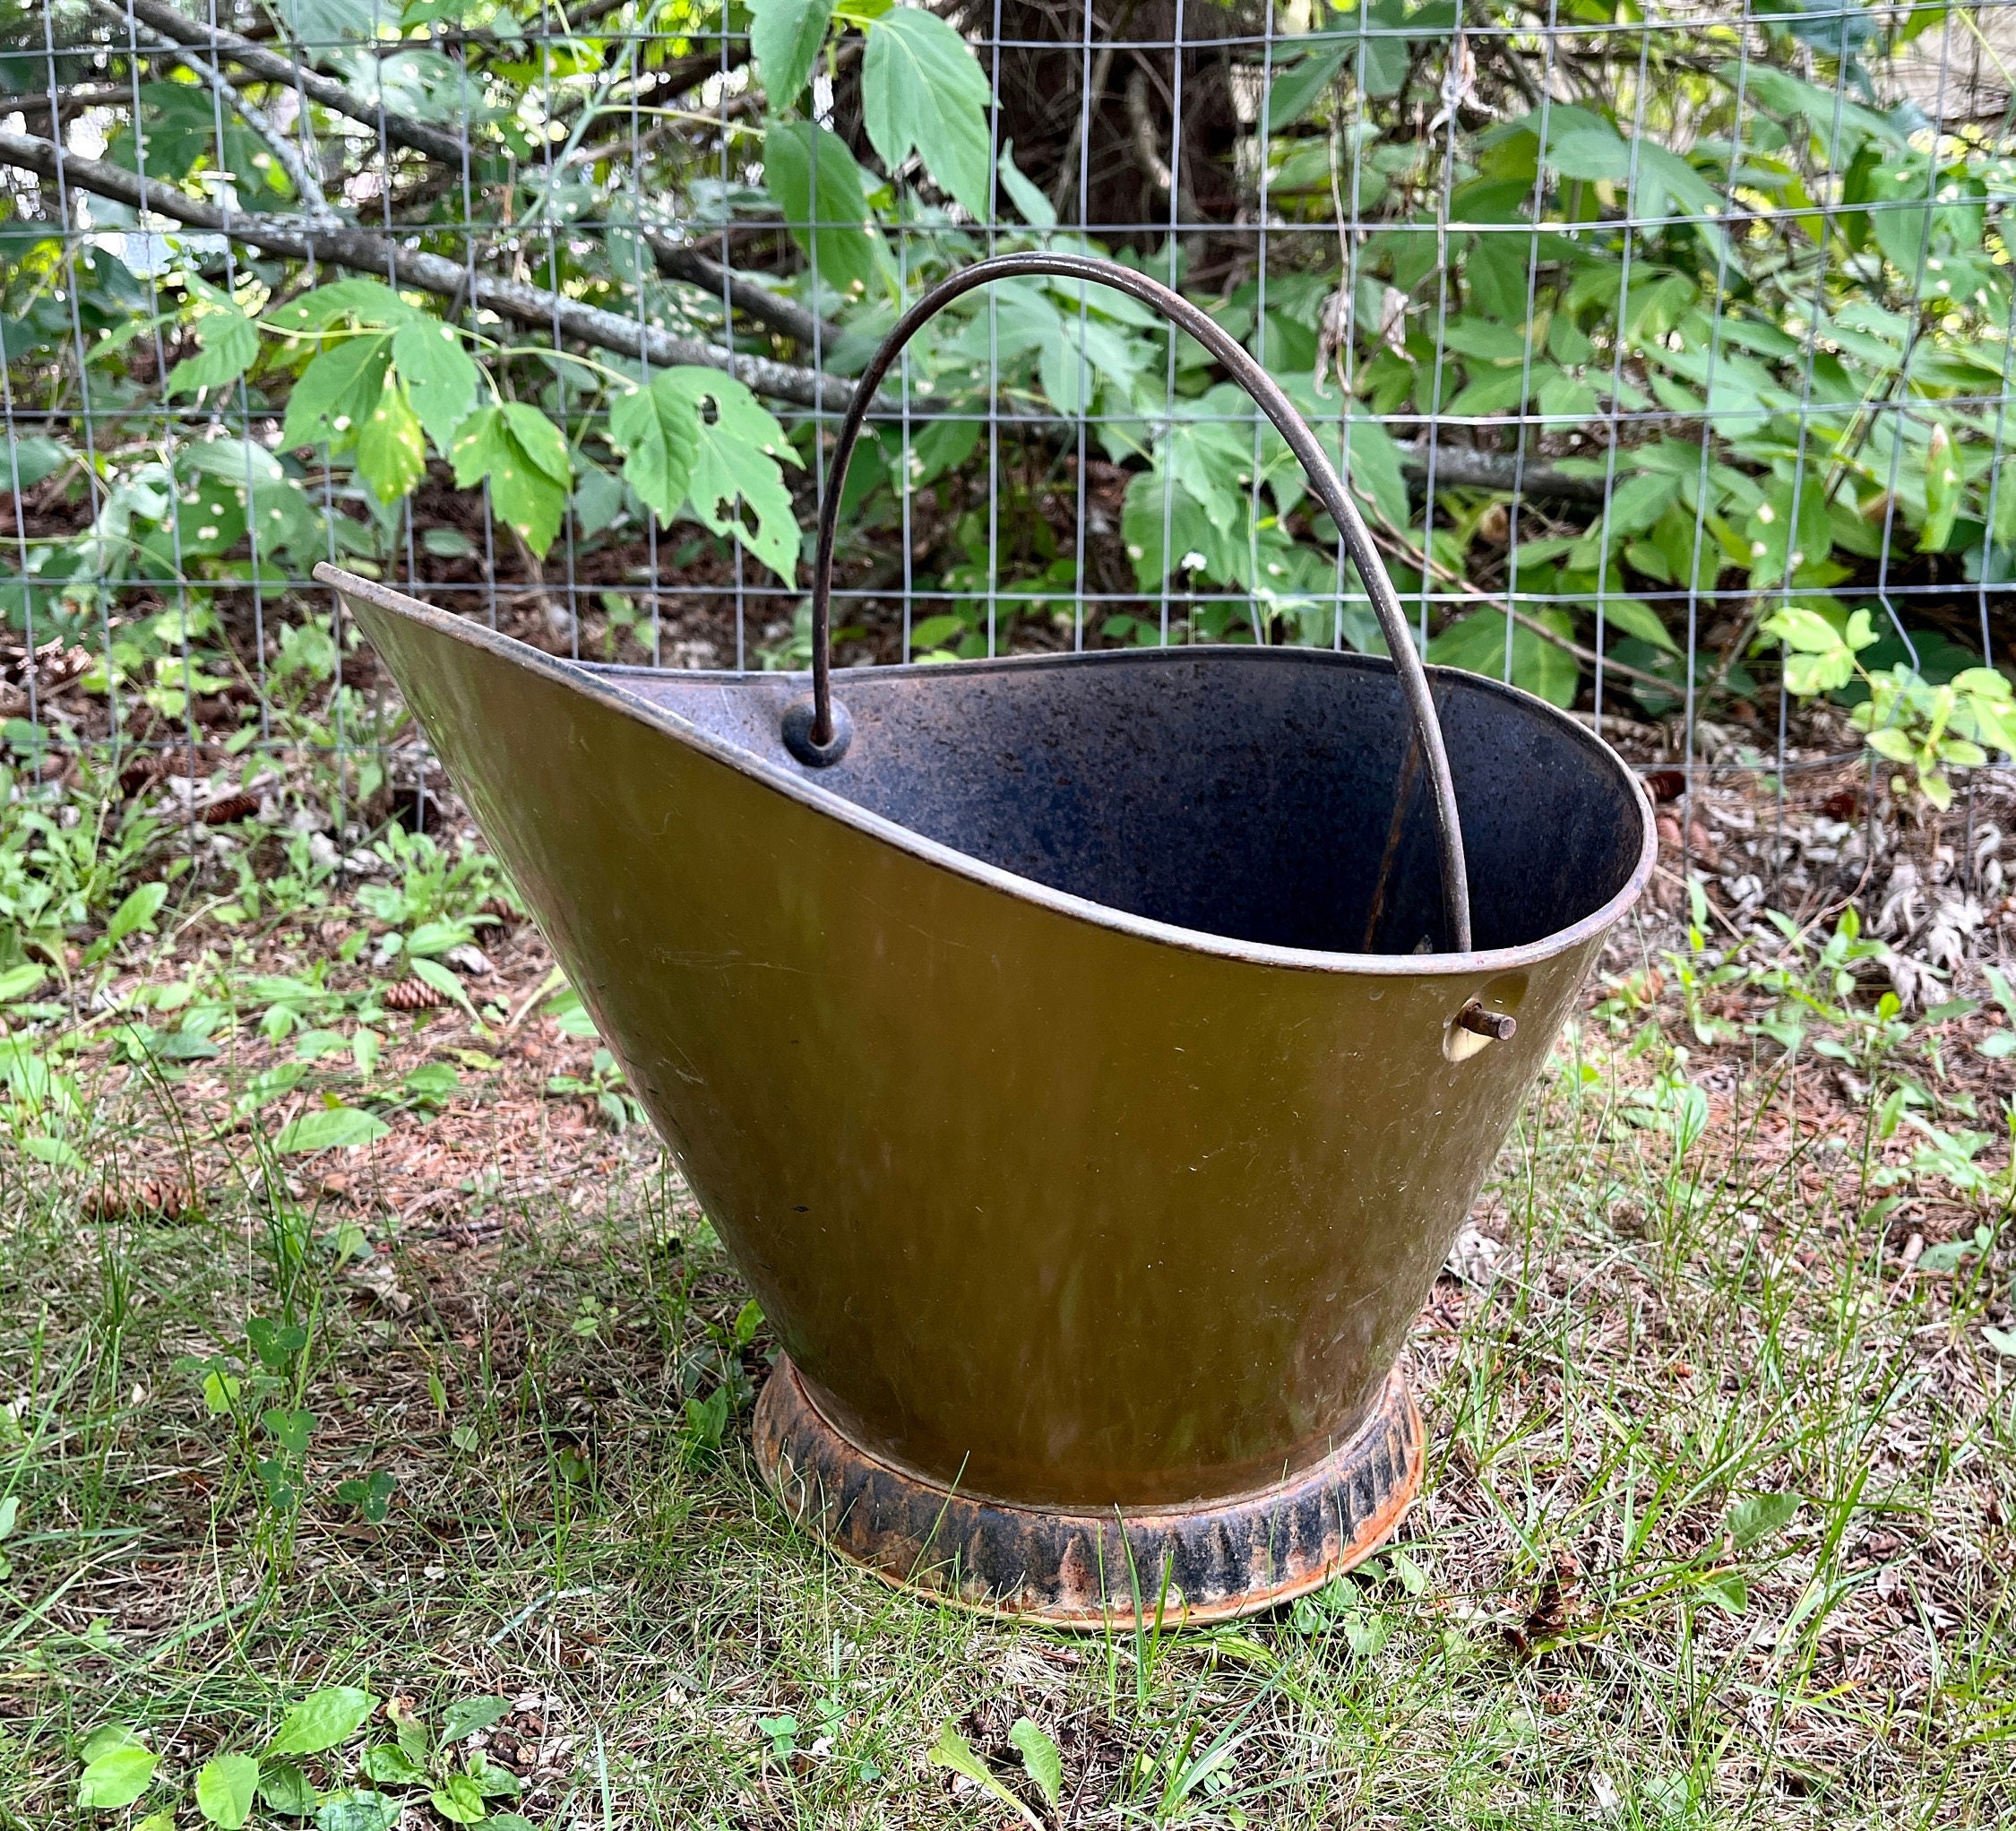 Vintage Wash Bucket Galvanized Metal Mop Wringer Wood Rollers De Luxe  Steampunk